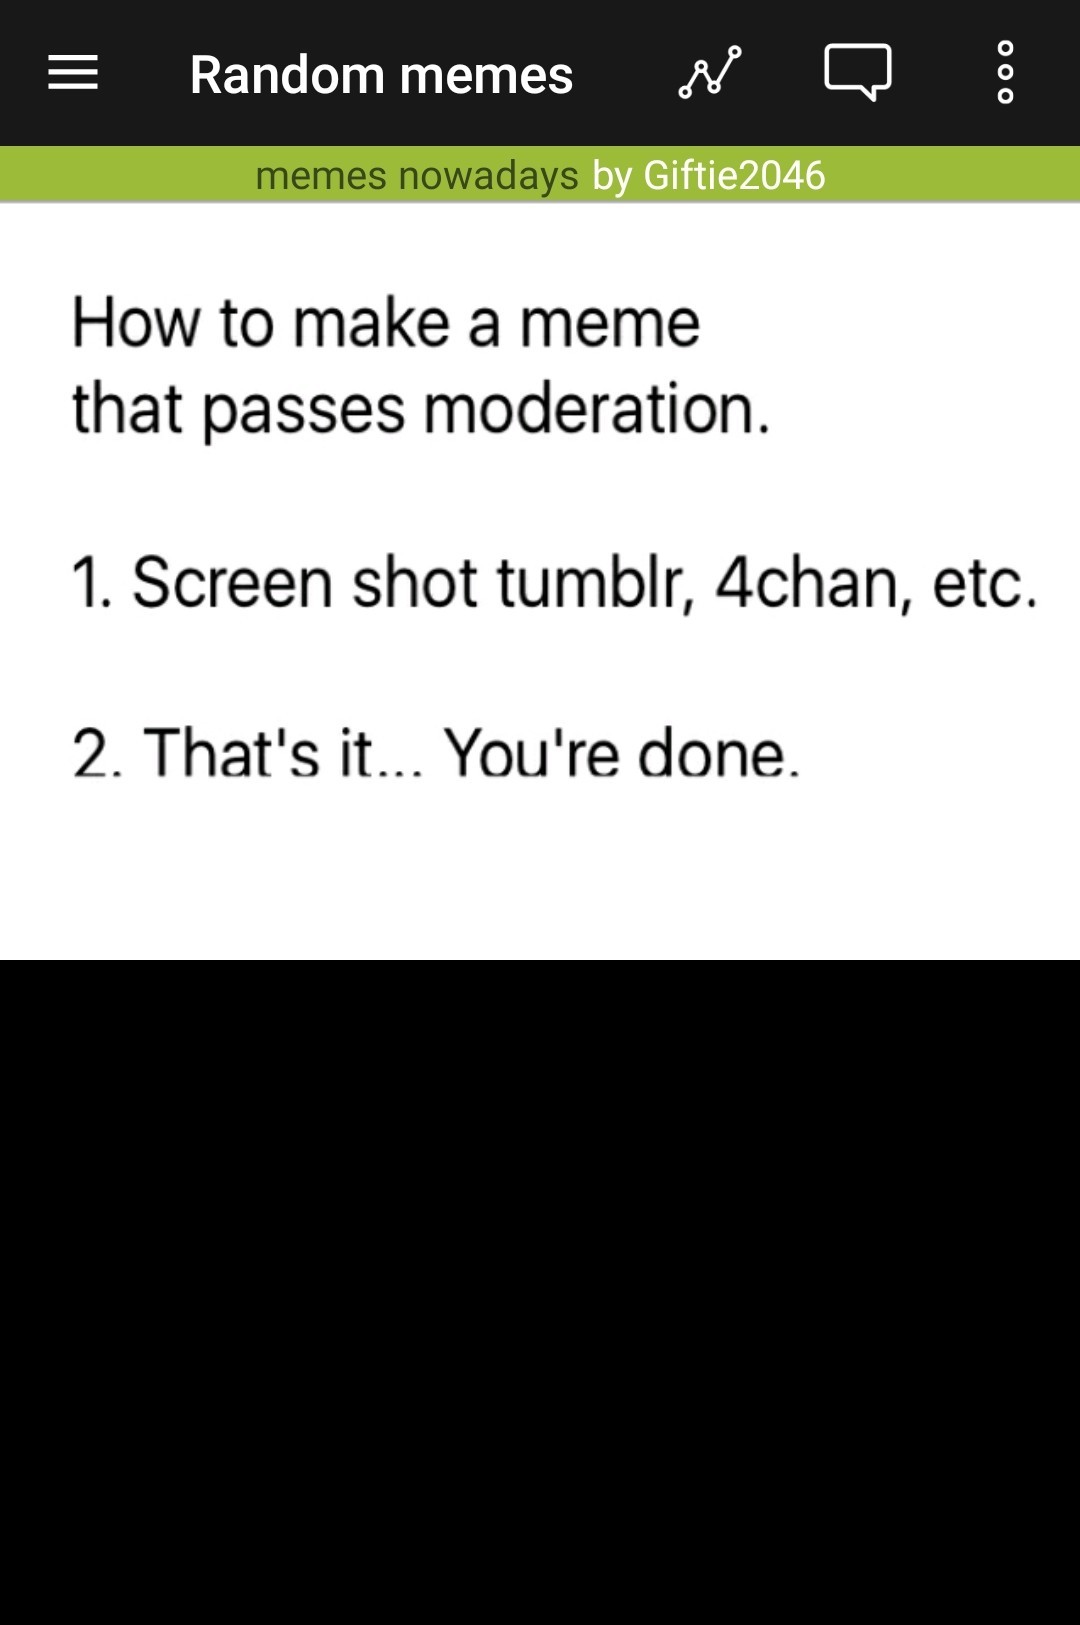 How to make a meme